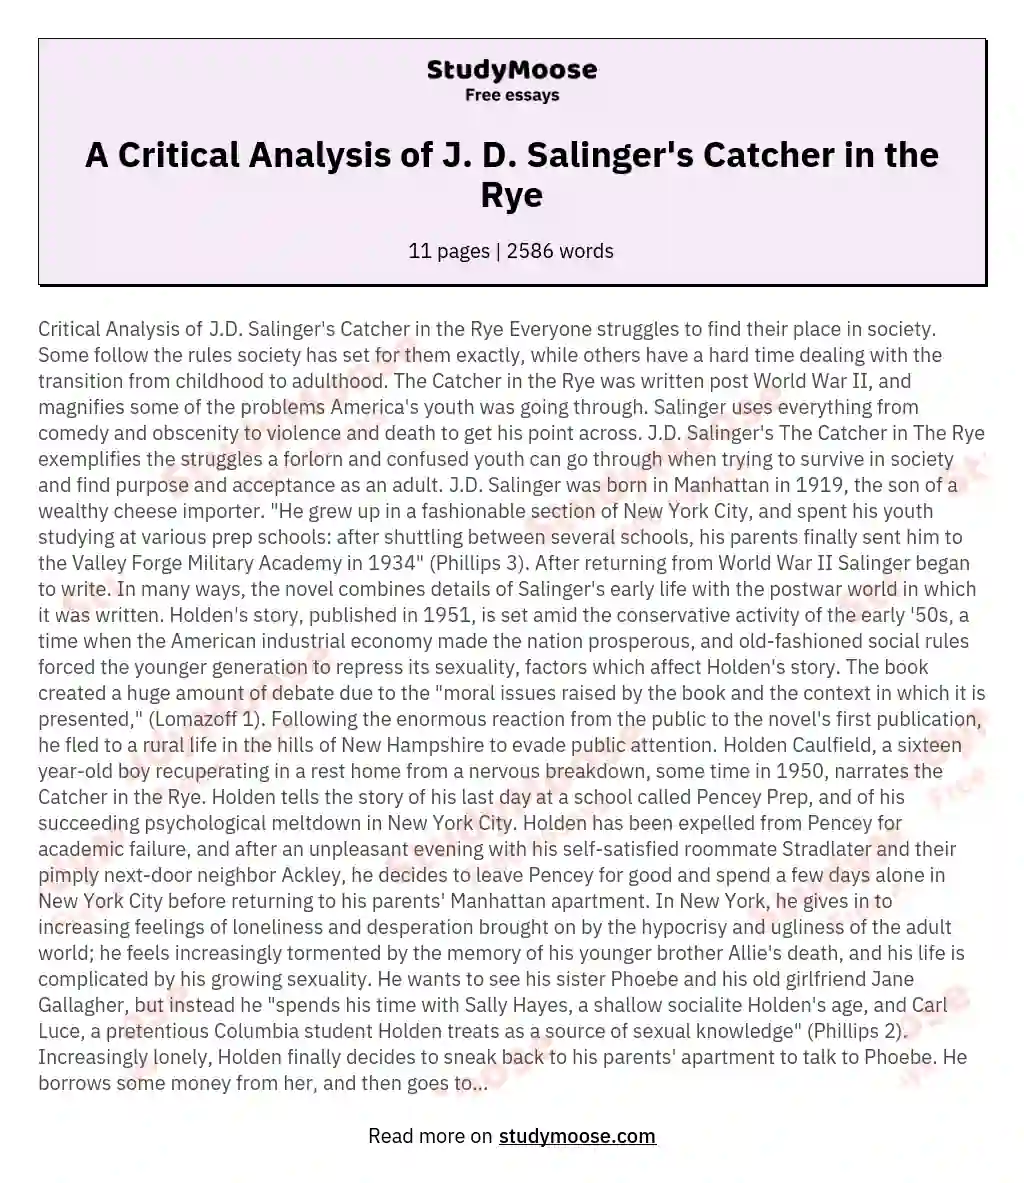 catcher in the rye analysis